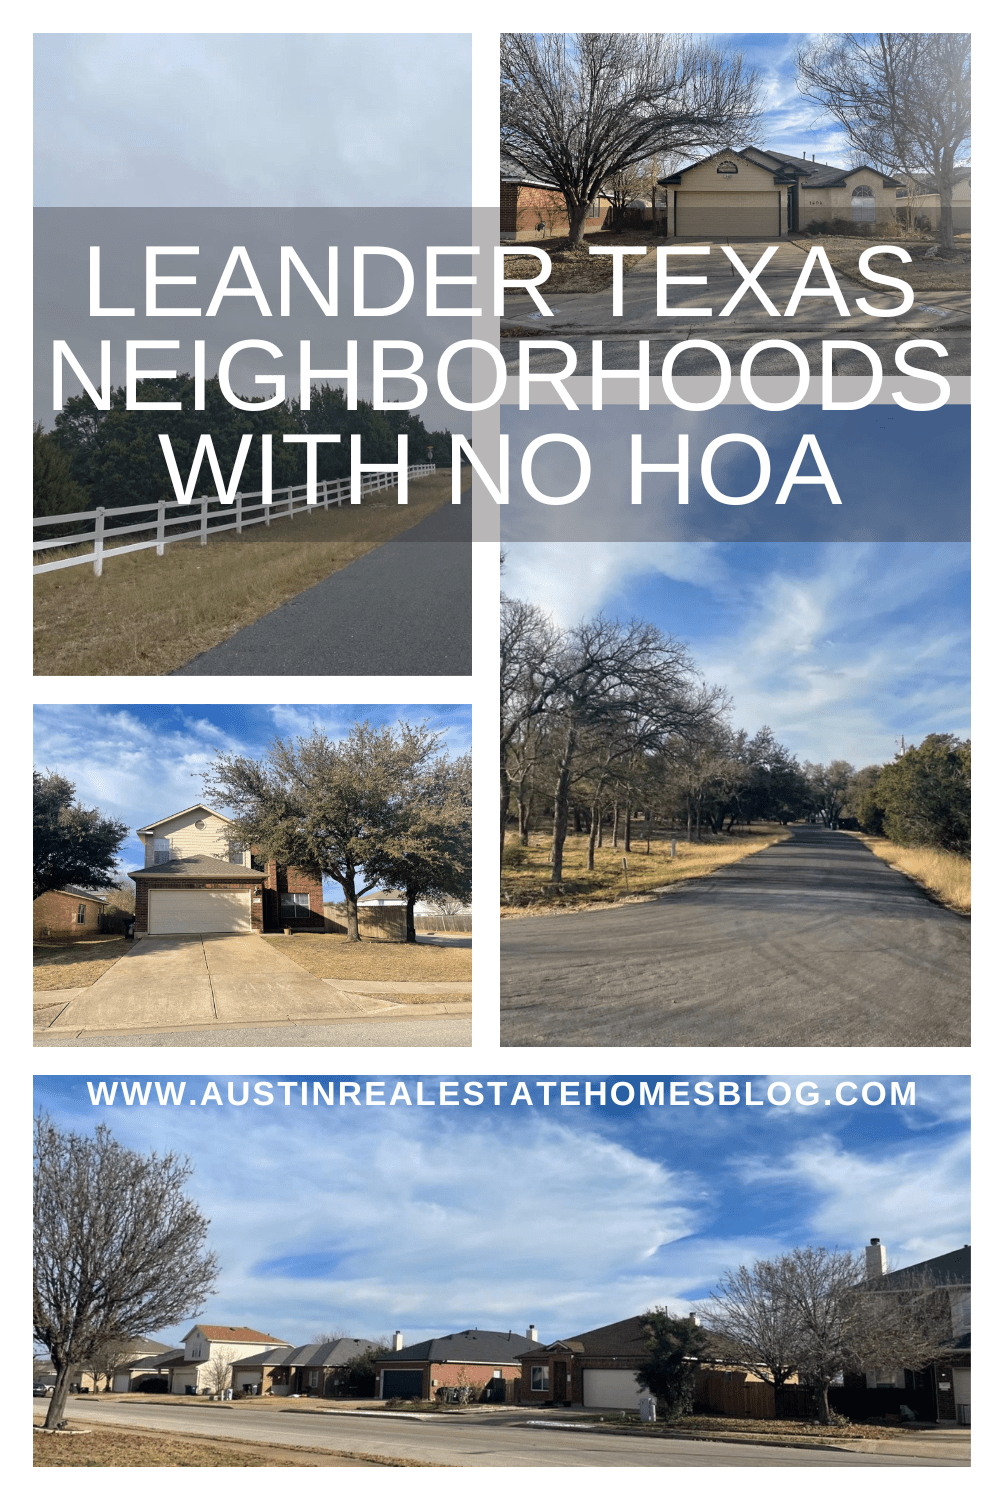 Leander TX neighborhoods with no HOA